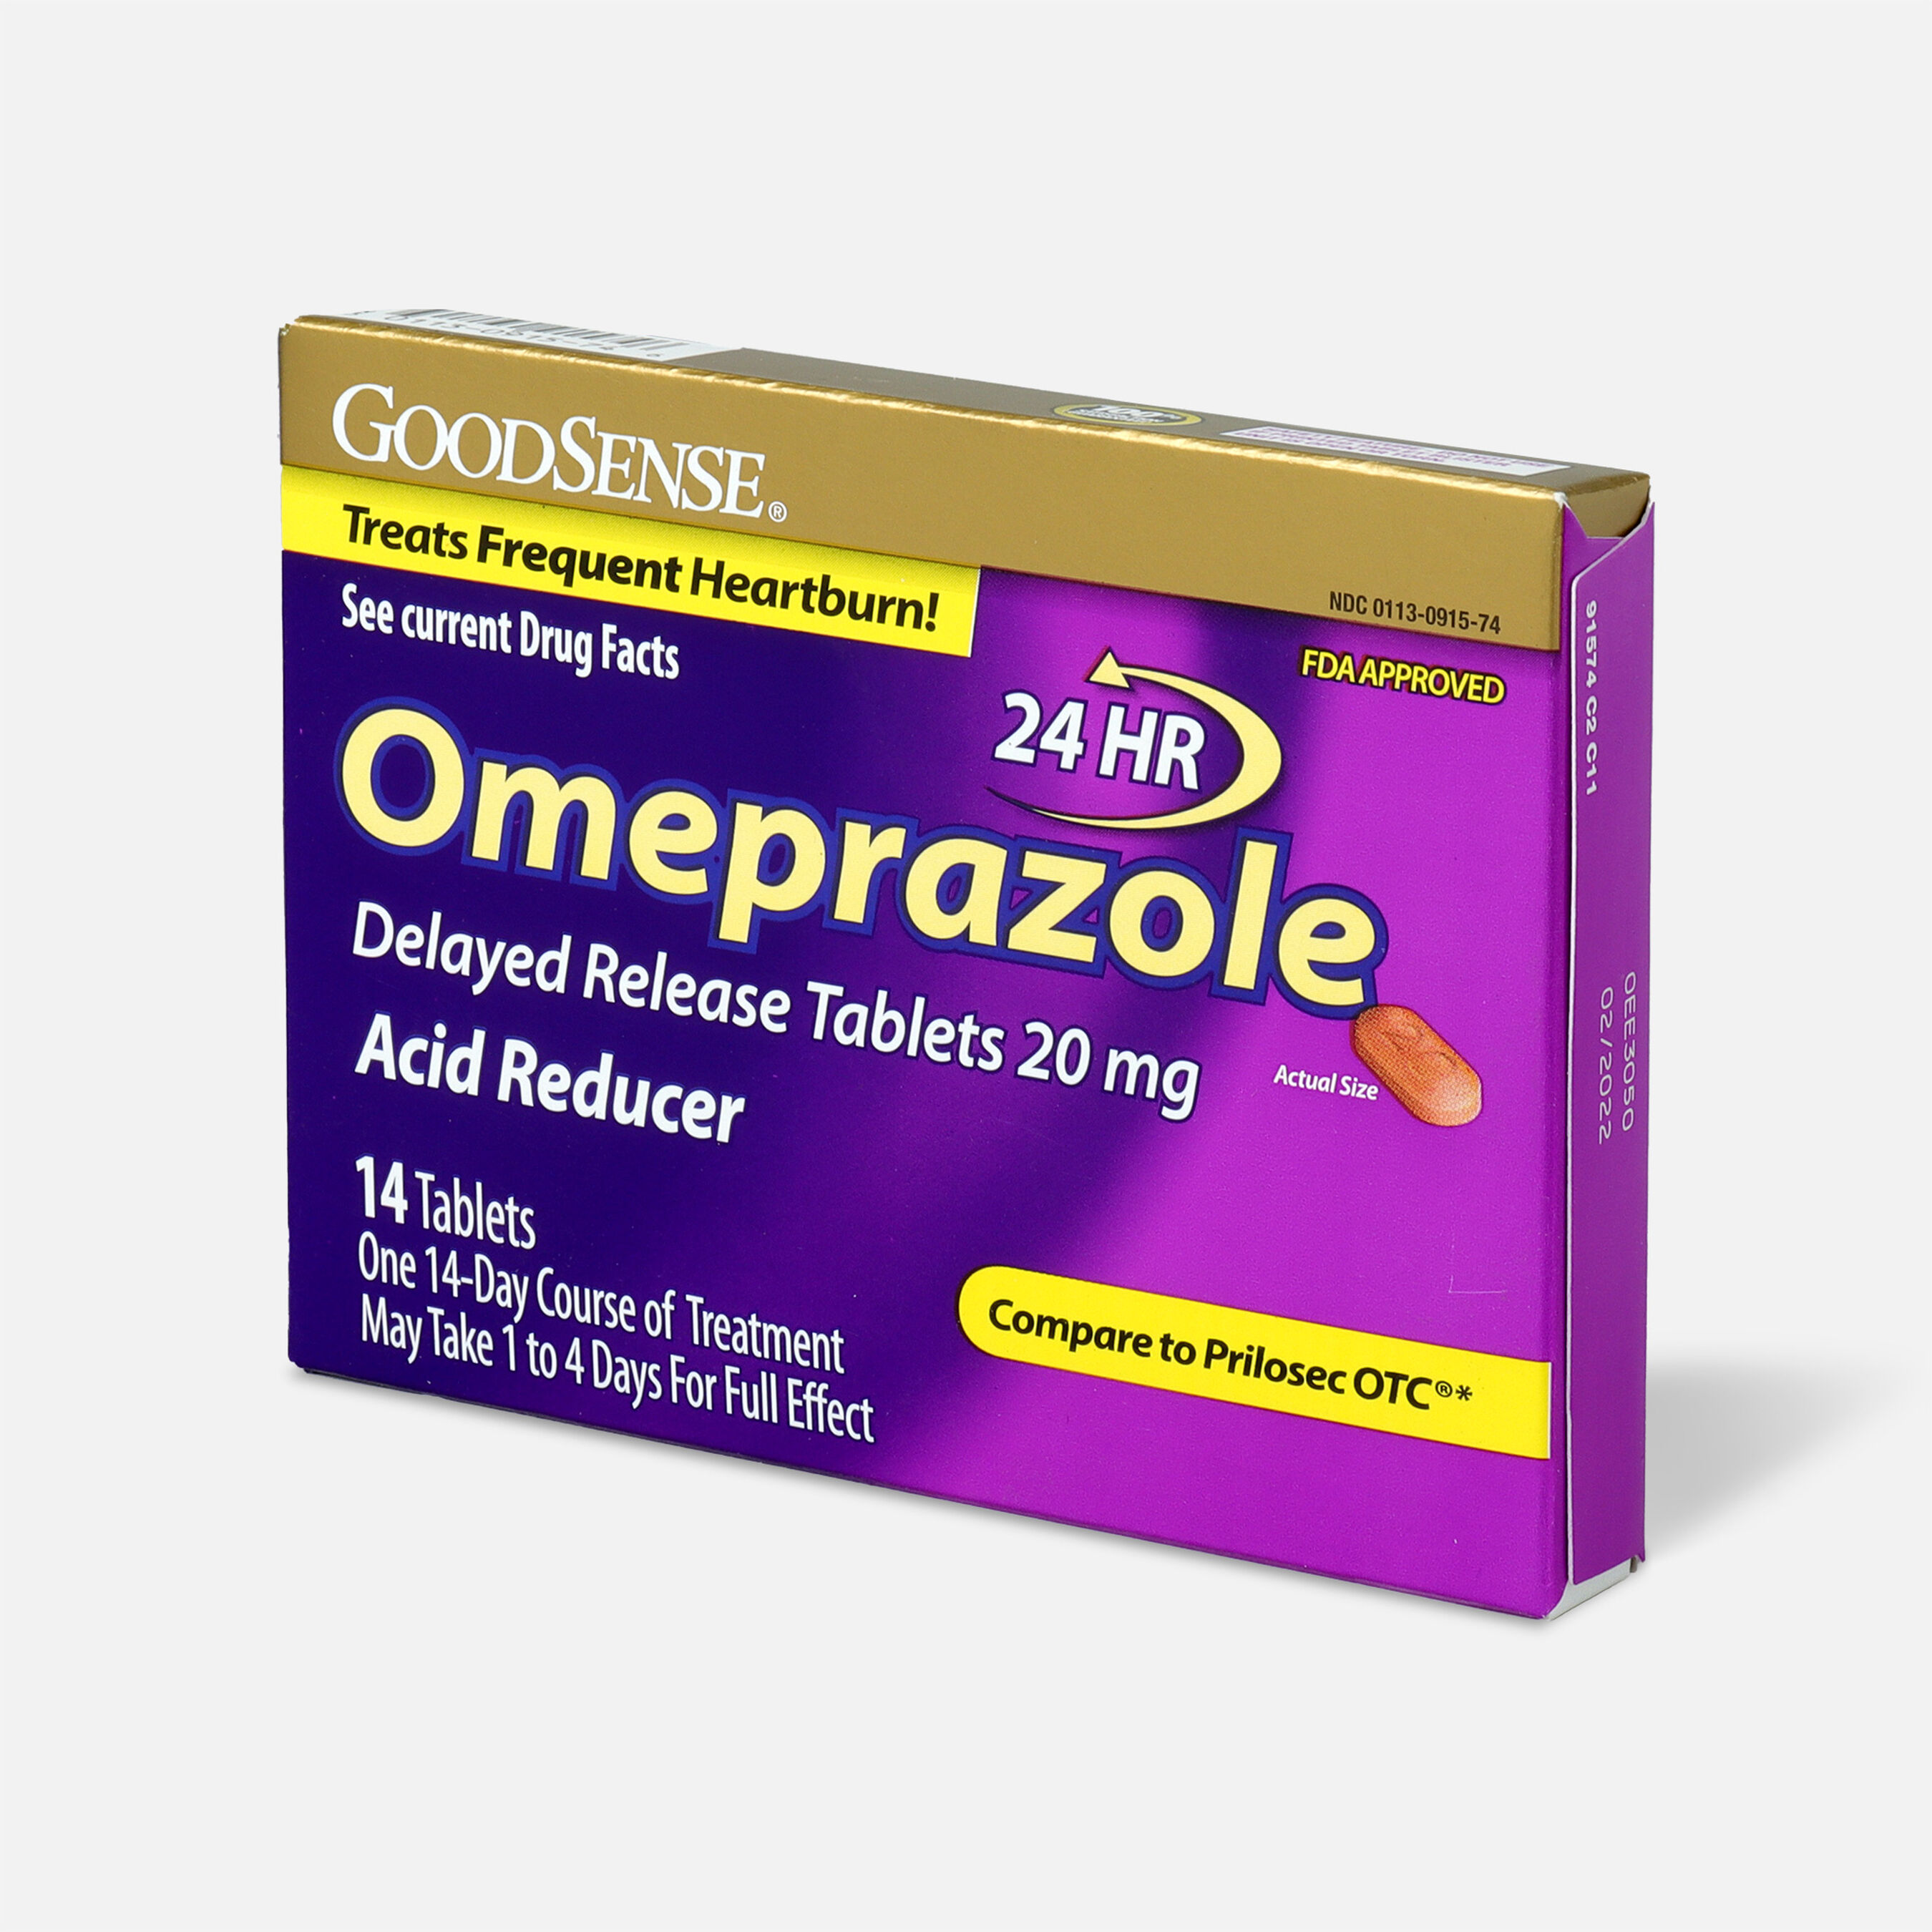 GoodSense® Omeprazole Delayed Release Tablets 20 mg, Acid Reducer